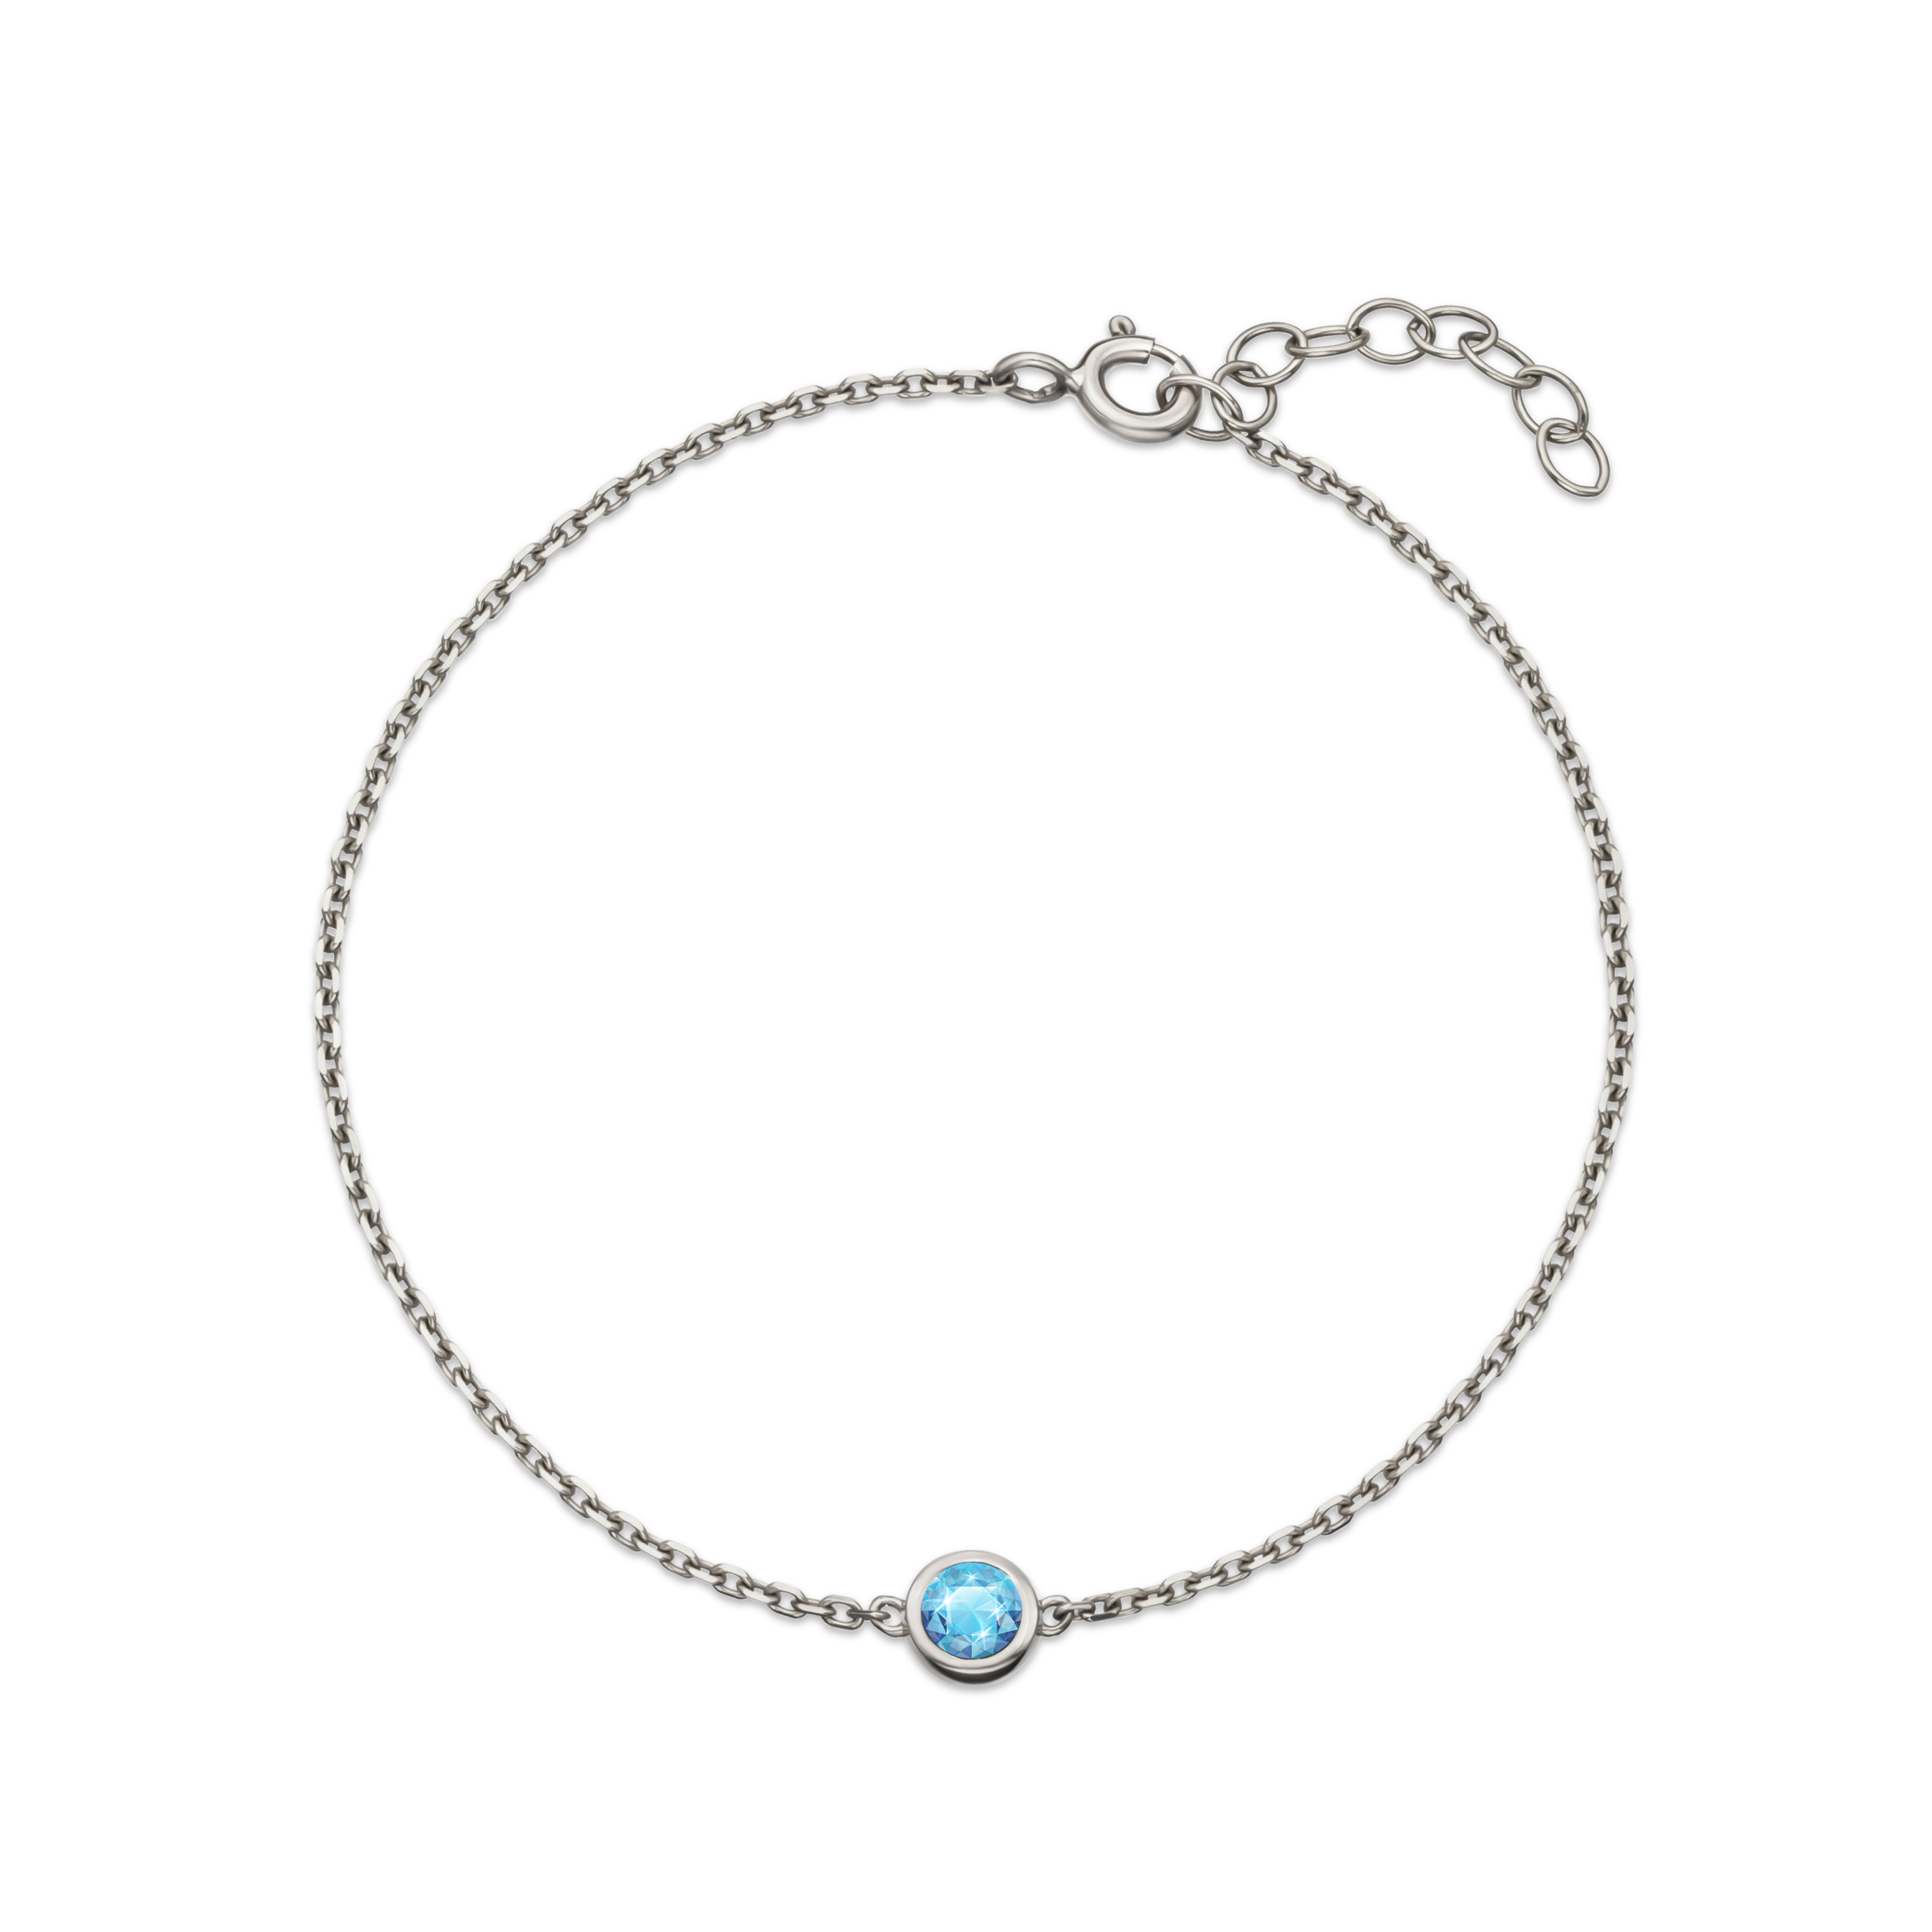 Blue Topaz birthstone bracelet